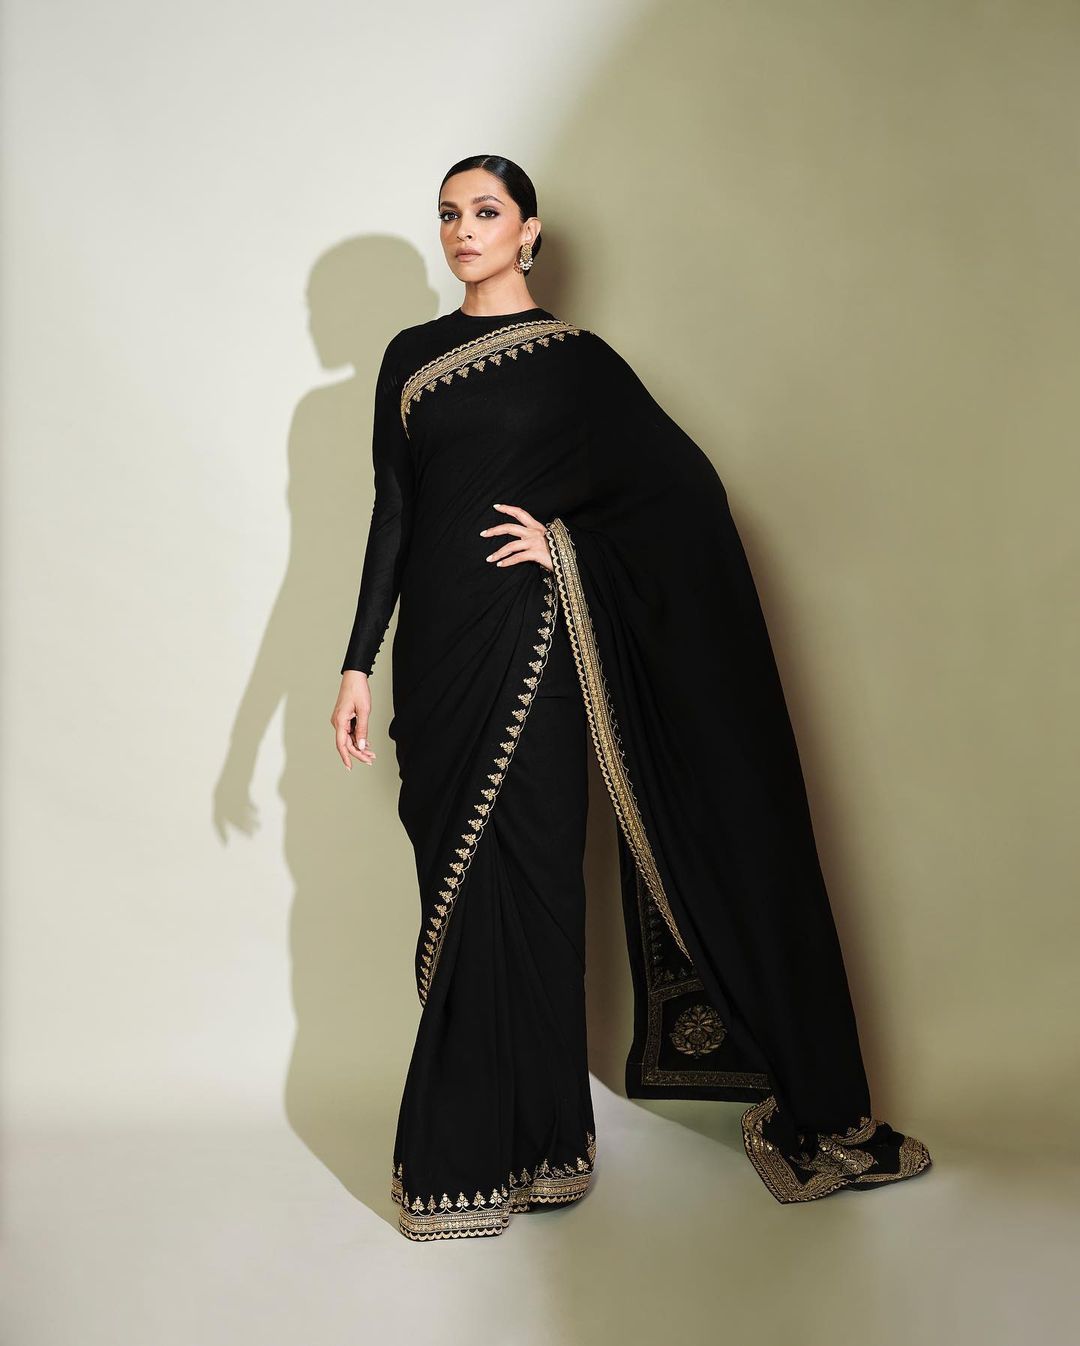 Deepika Padukone Is A Whole Mood In Striking Black Sari: Deepika Padukone. Photo Credit: www.instagram.com